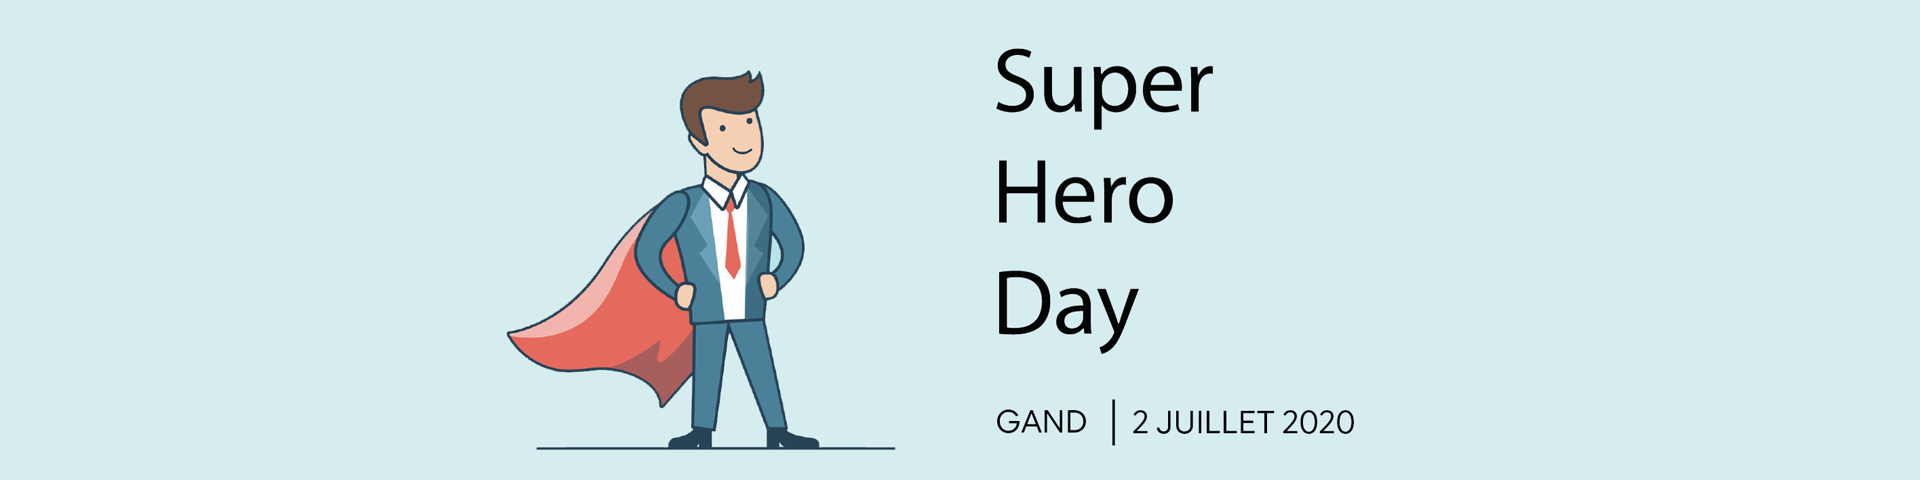 Intrum Super Hero Day 2020 reporté